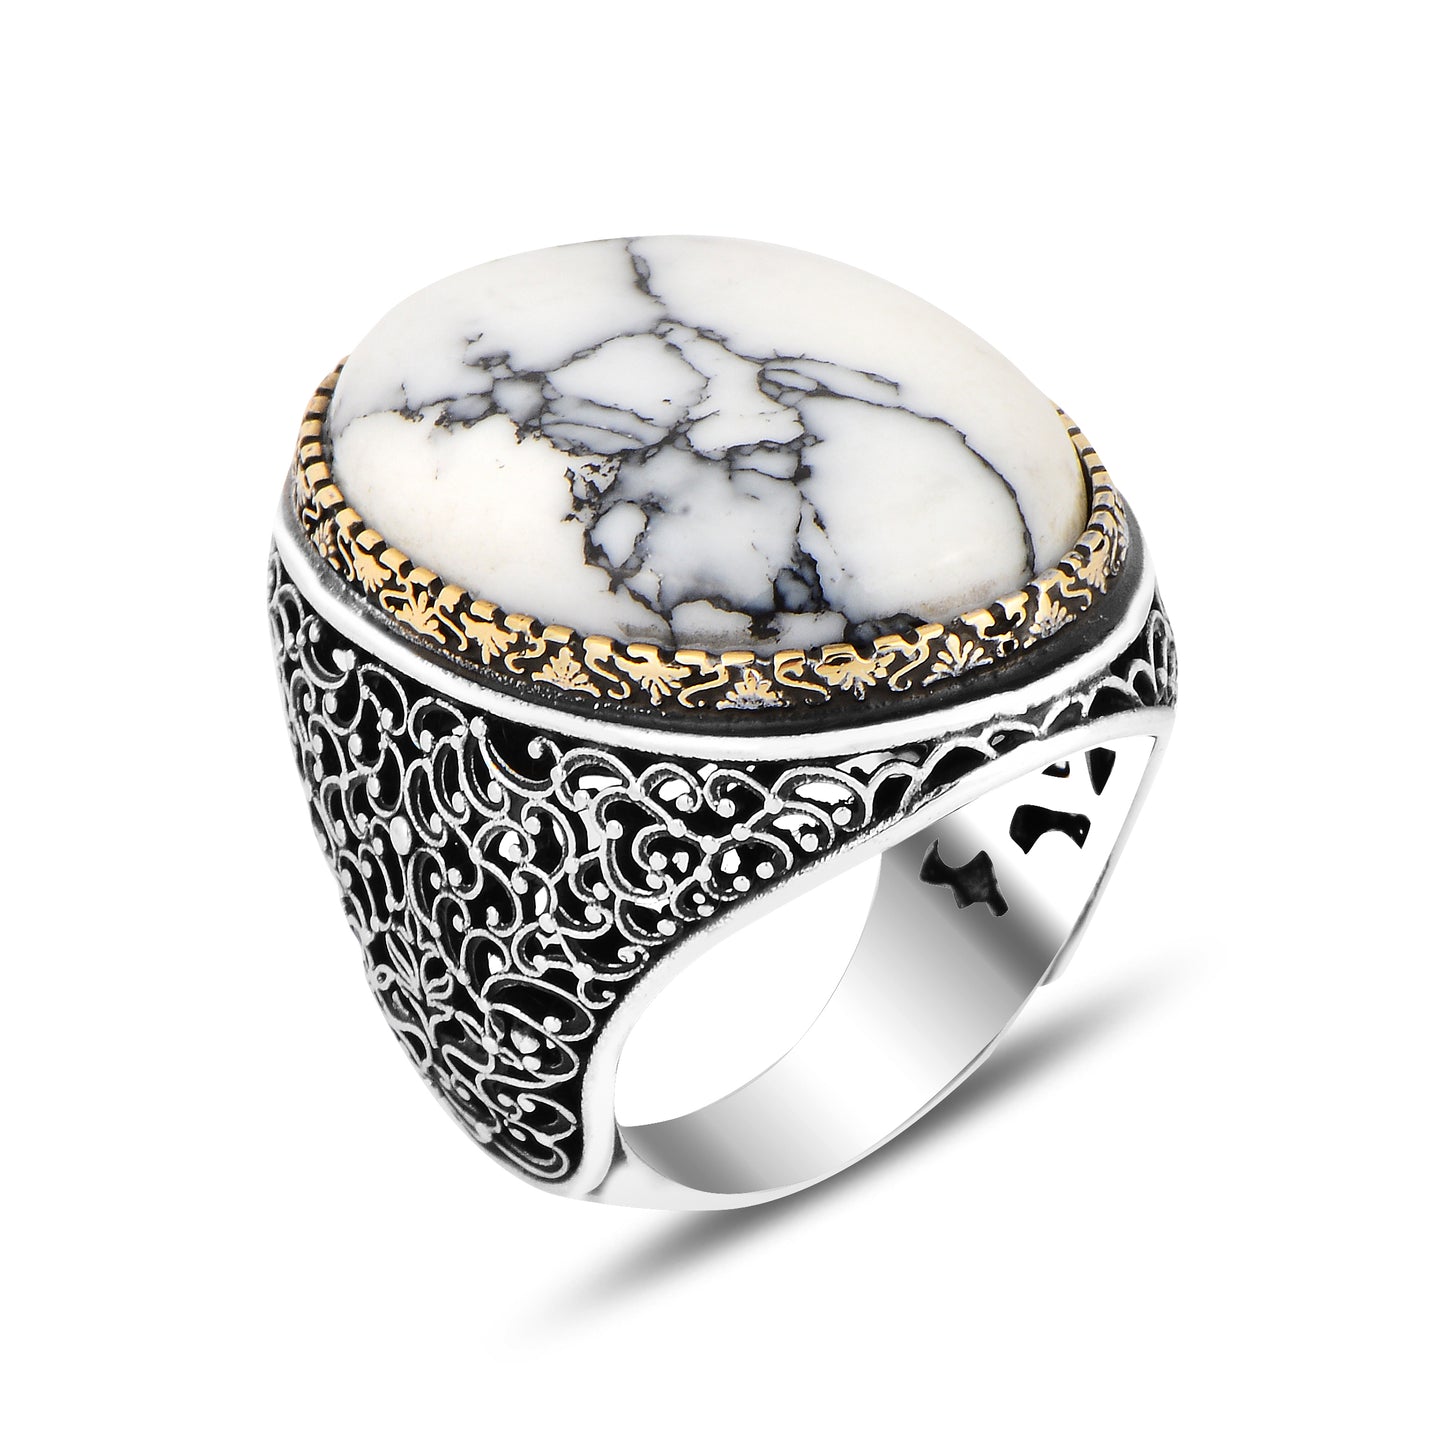 Silver Handmade Large White Turquoise Stone Ring